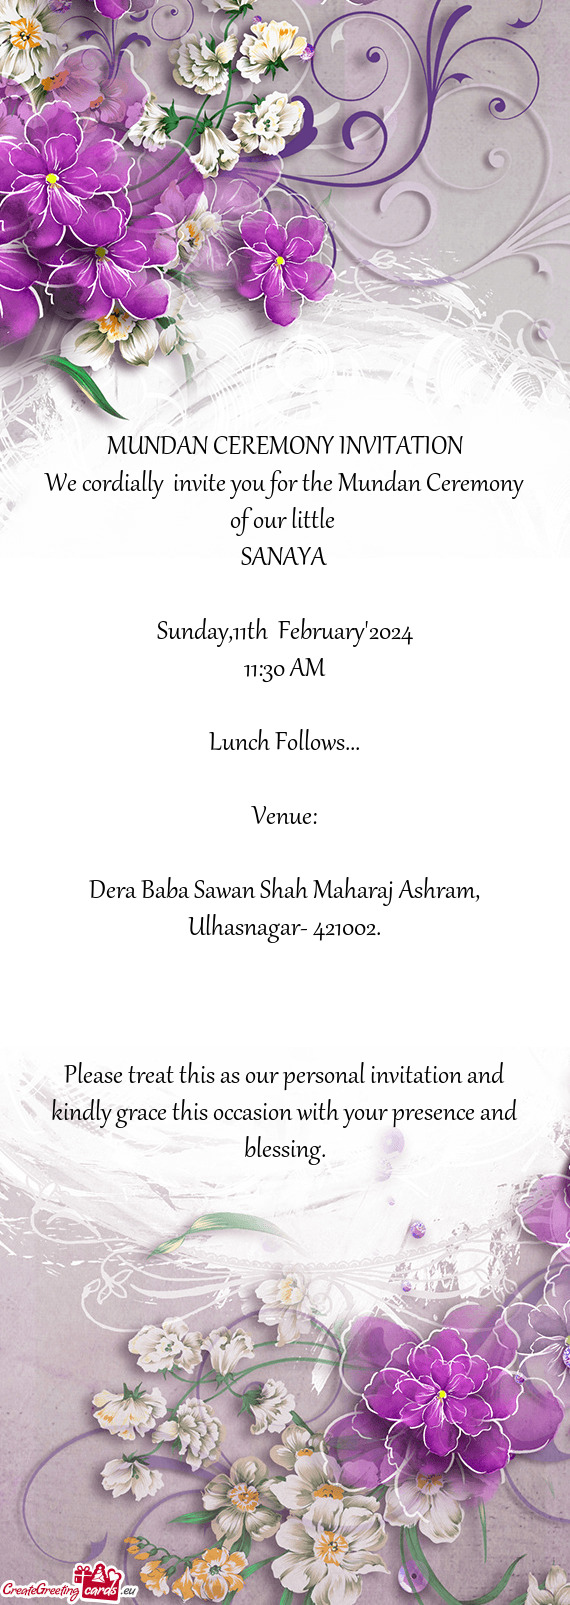 MUNDAN CEREMONY INVITATION We cordially invite you for the Mundan Ceremony of our little SANAYA